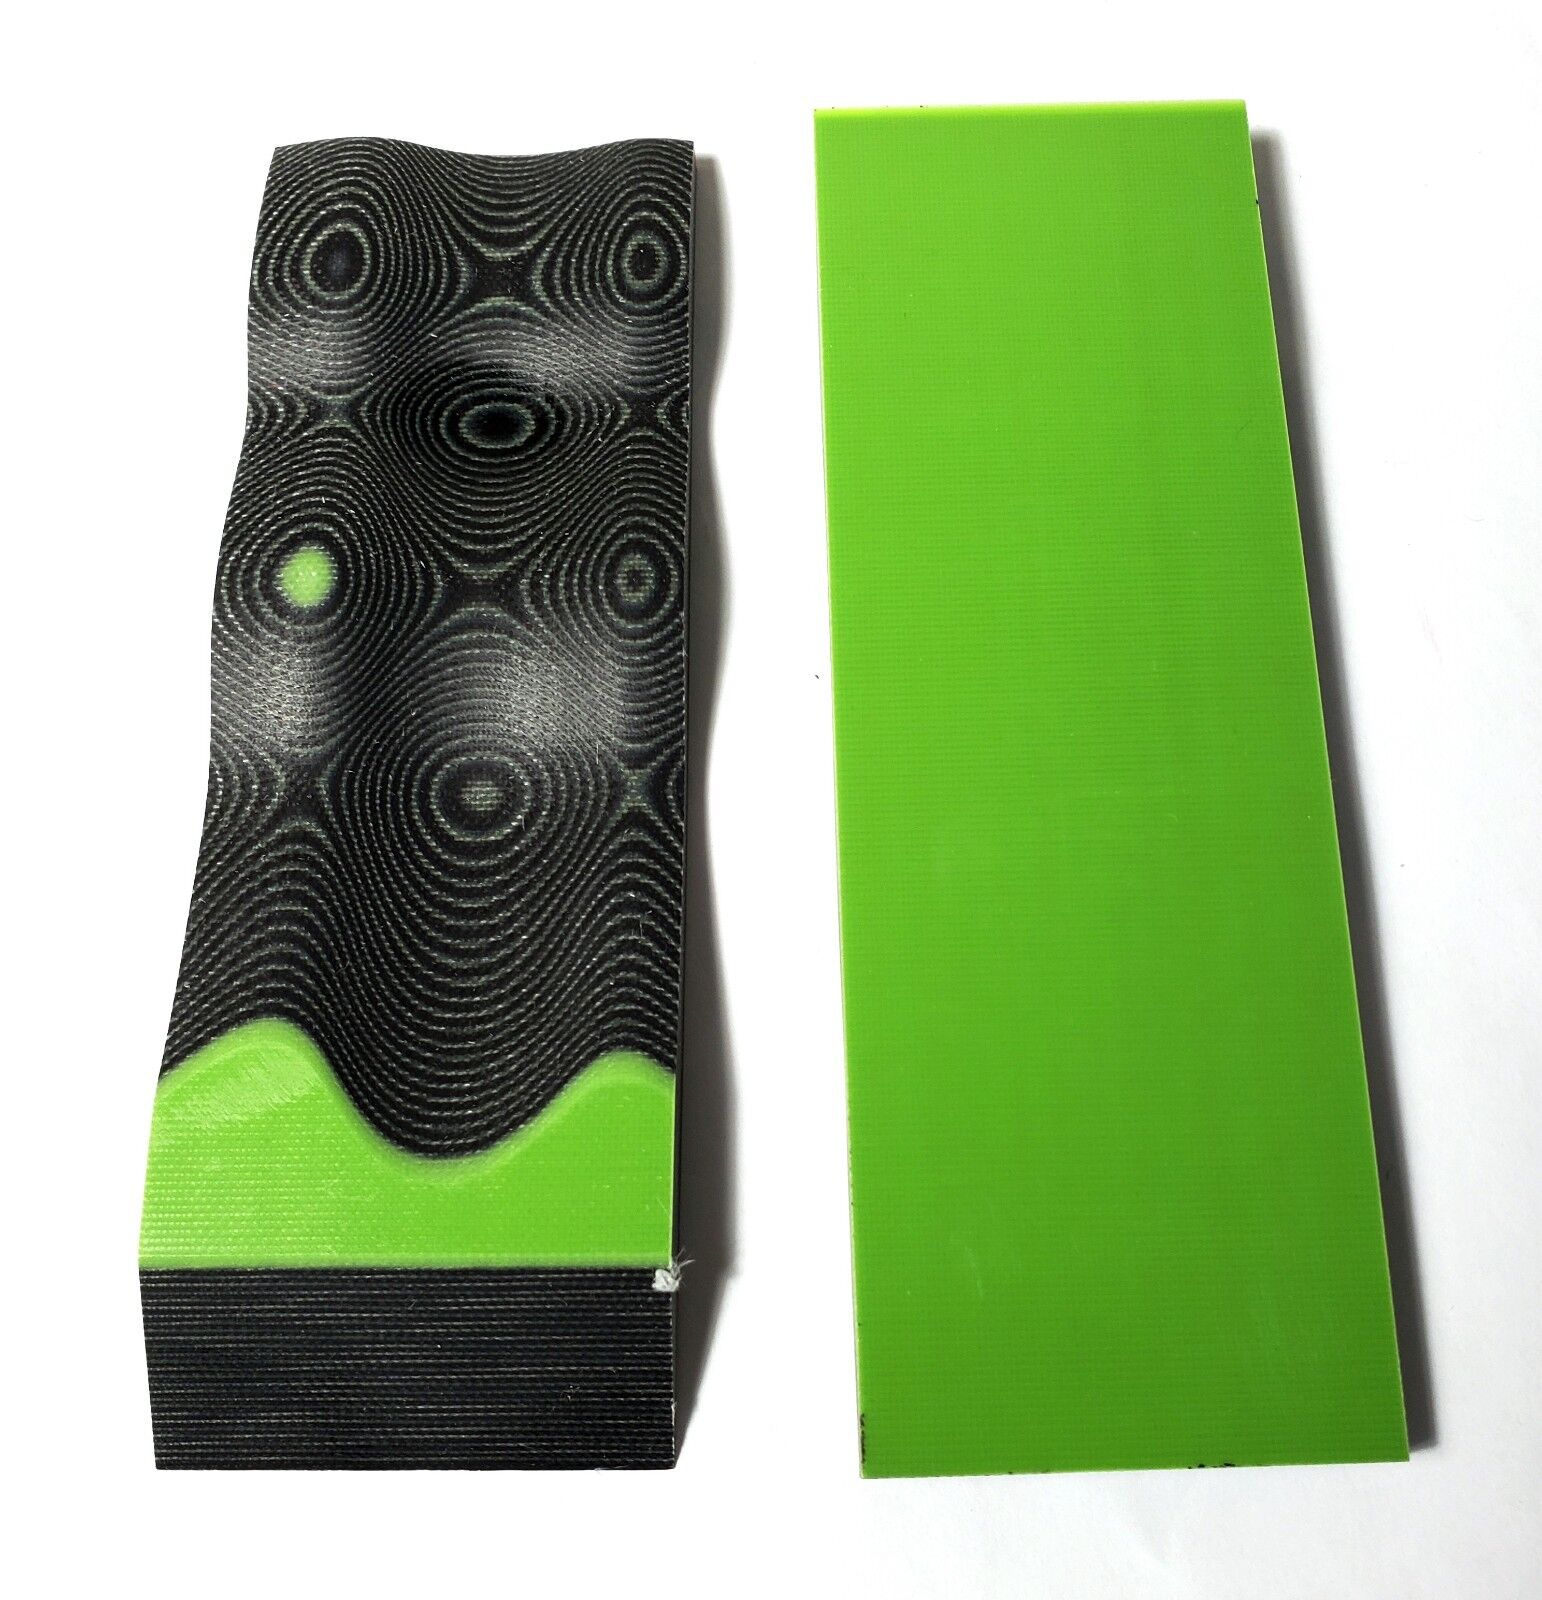  G10 3/16 187 6x2 ACID GREEN / BLACK LAYERED KNIFE HANDLE SCALES 2 pcs. 